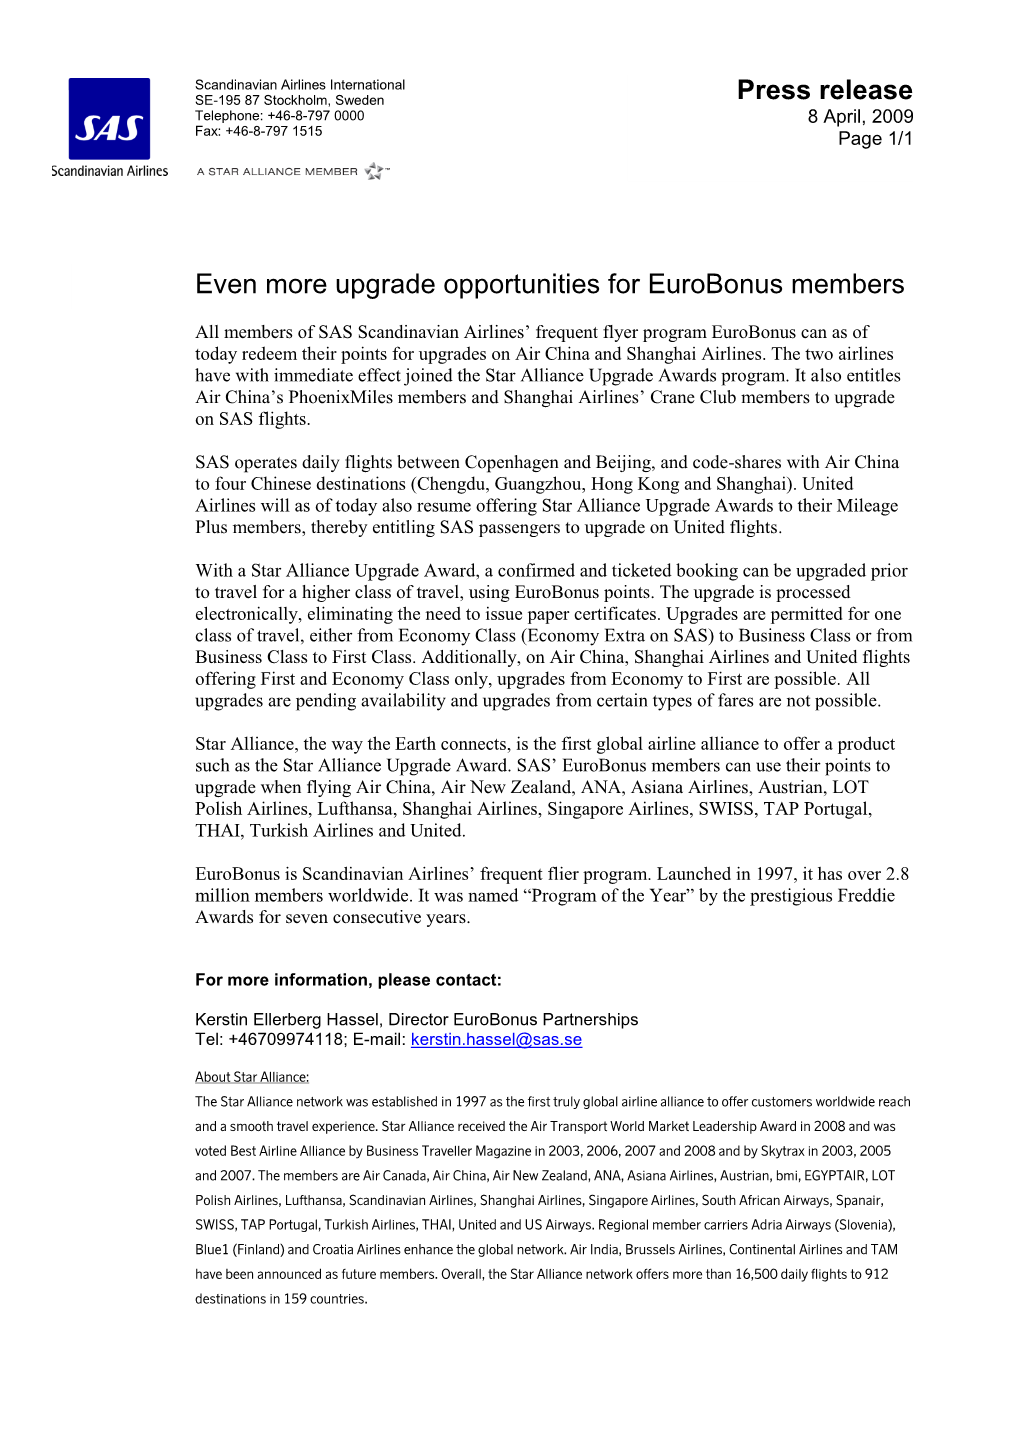 Press Release Even More Upgrade Opportunities for Eurobonus Members